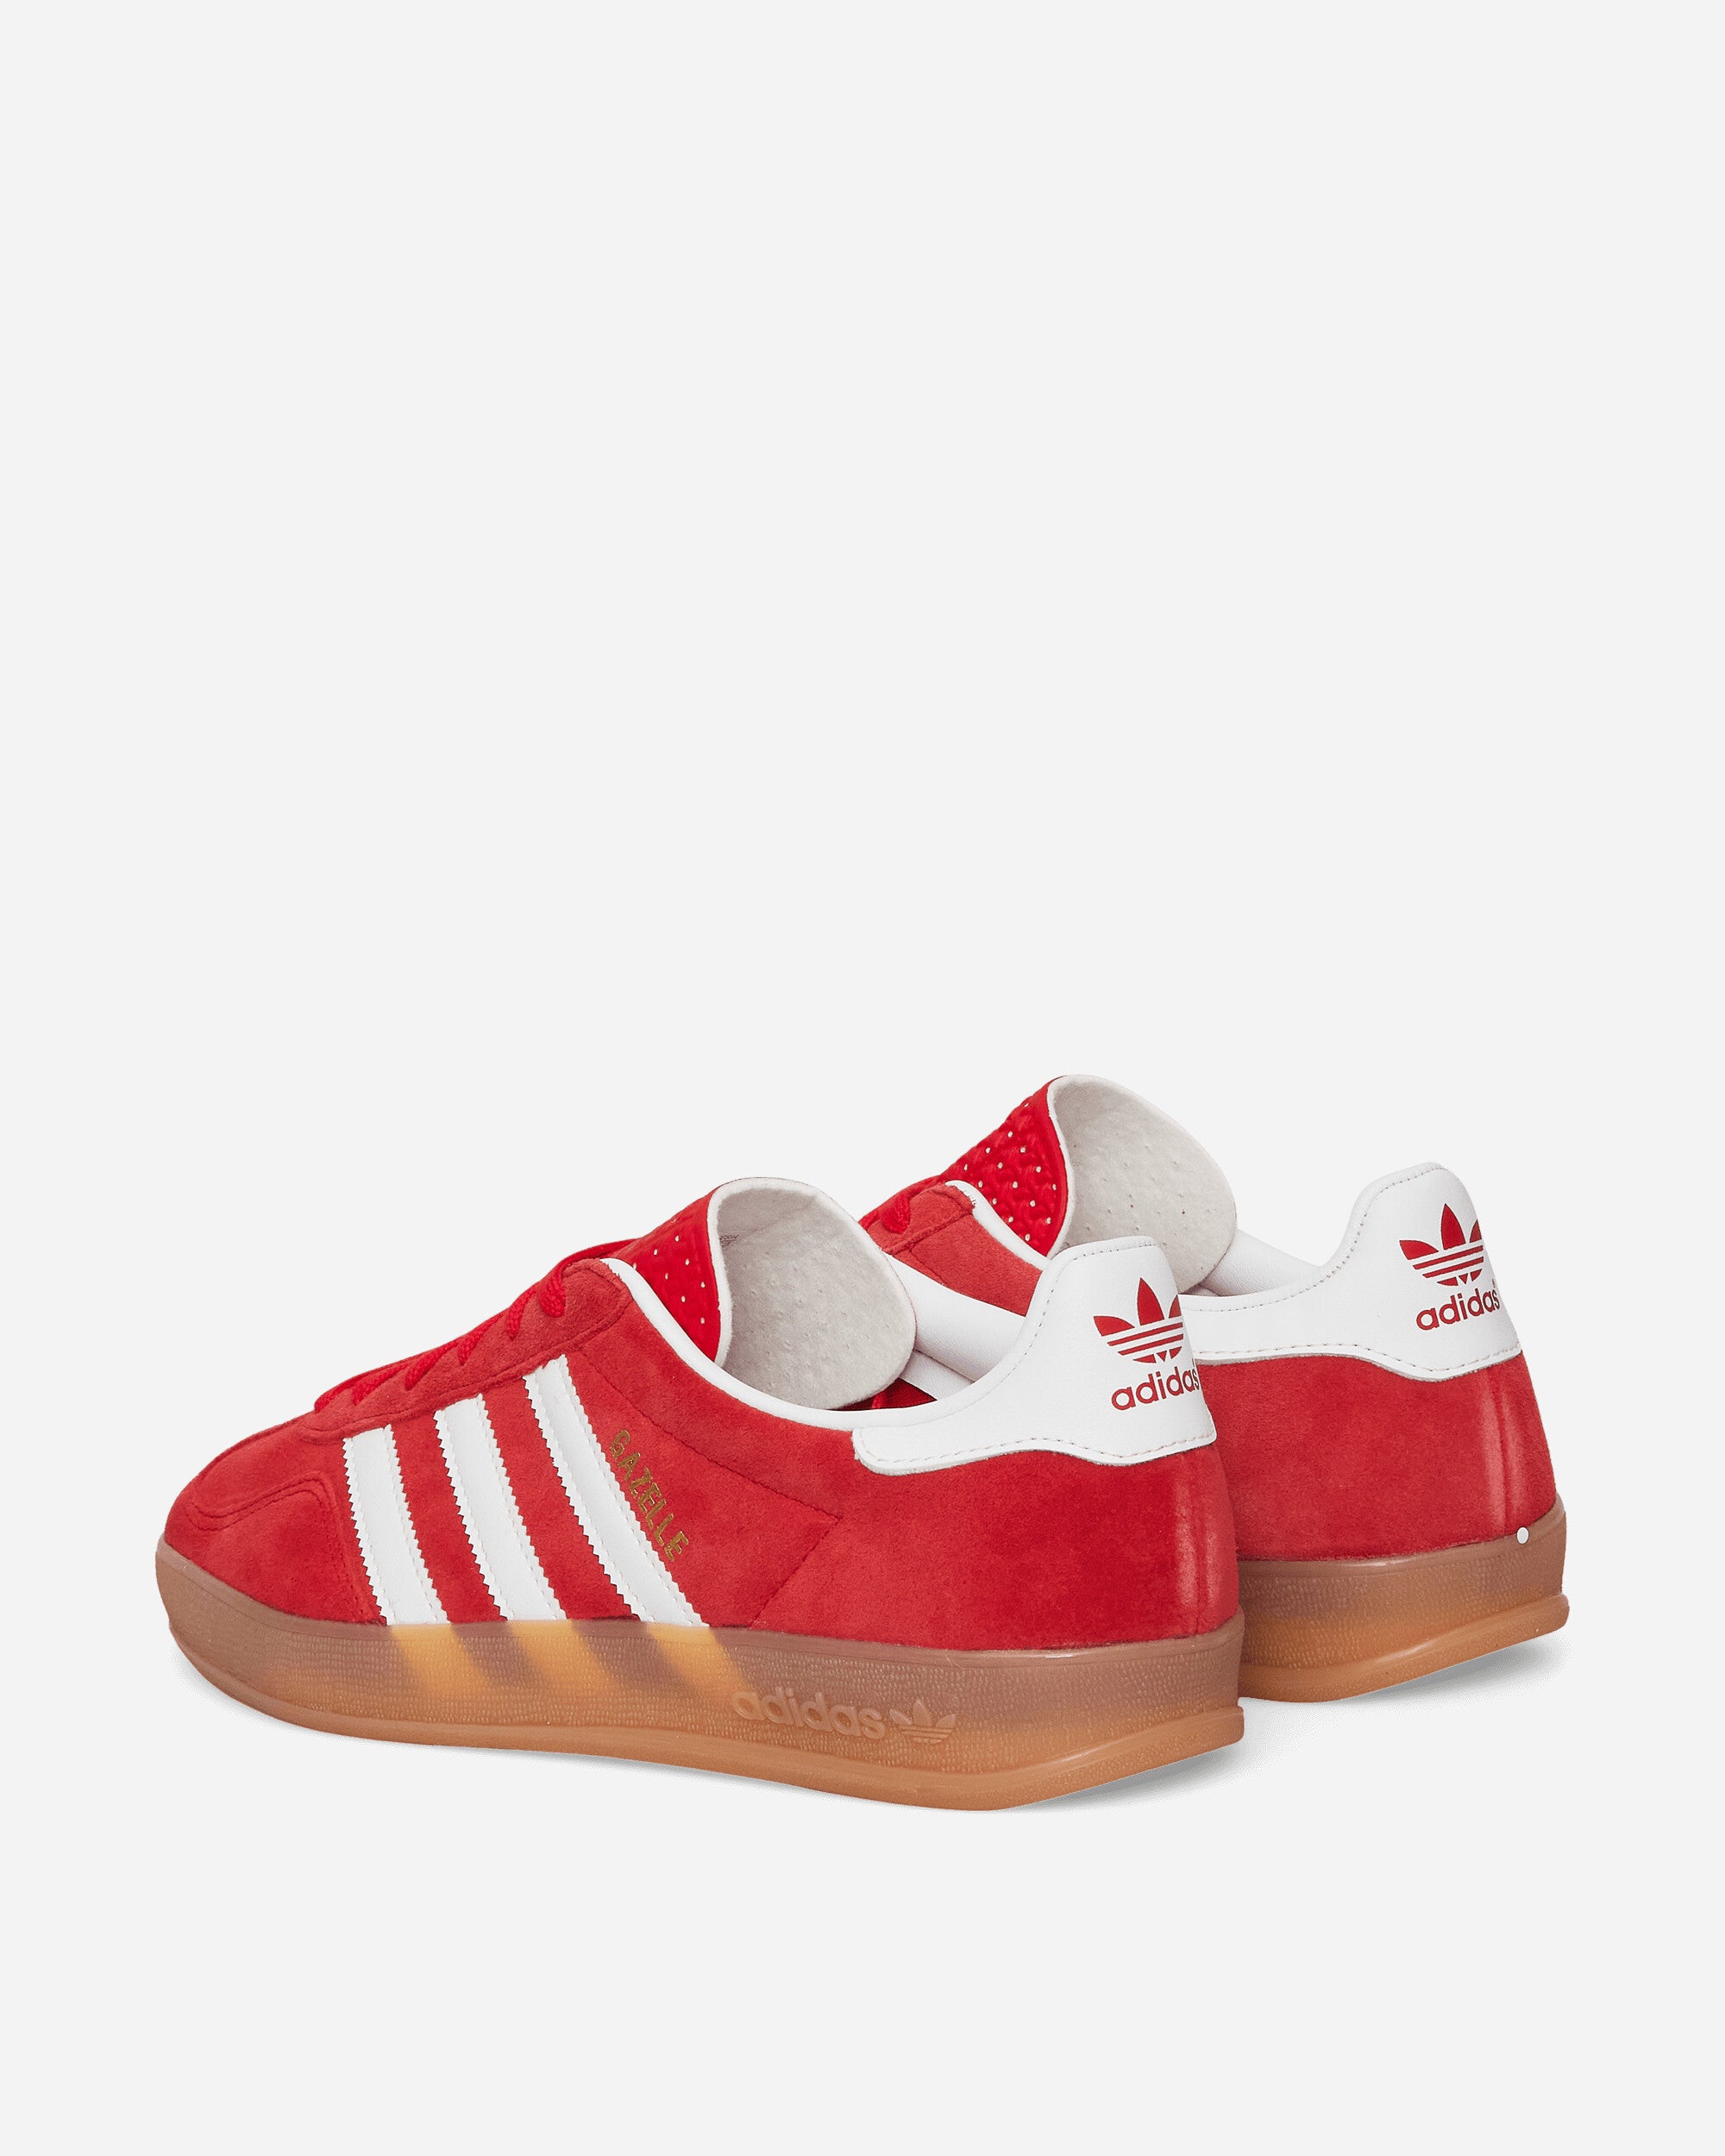 adidas Gazelle Indoor Better Scarlet/Ftwr White Sneakers Low JI2063